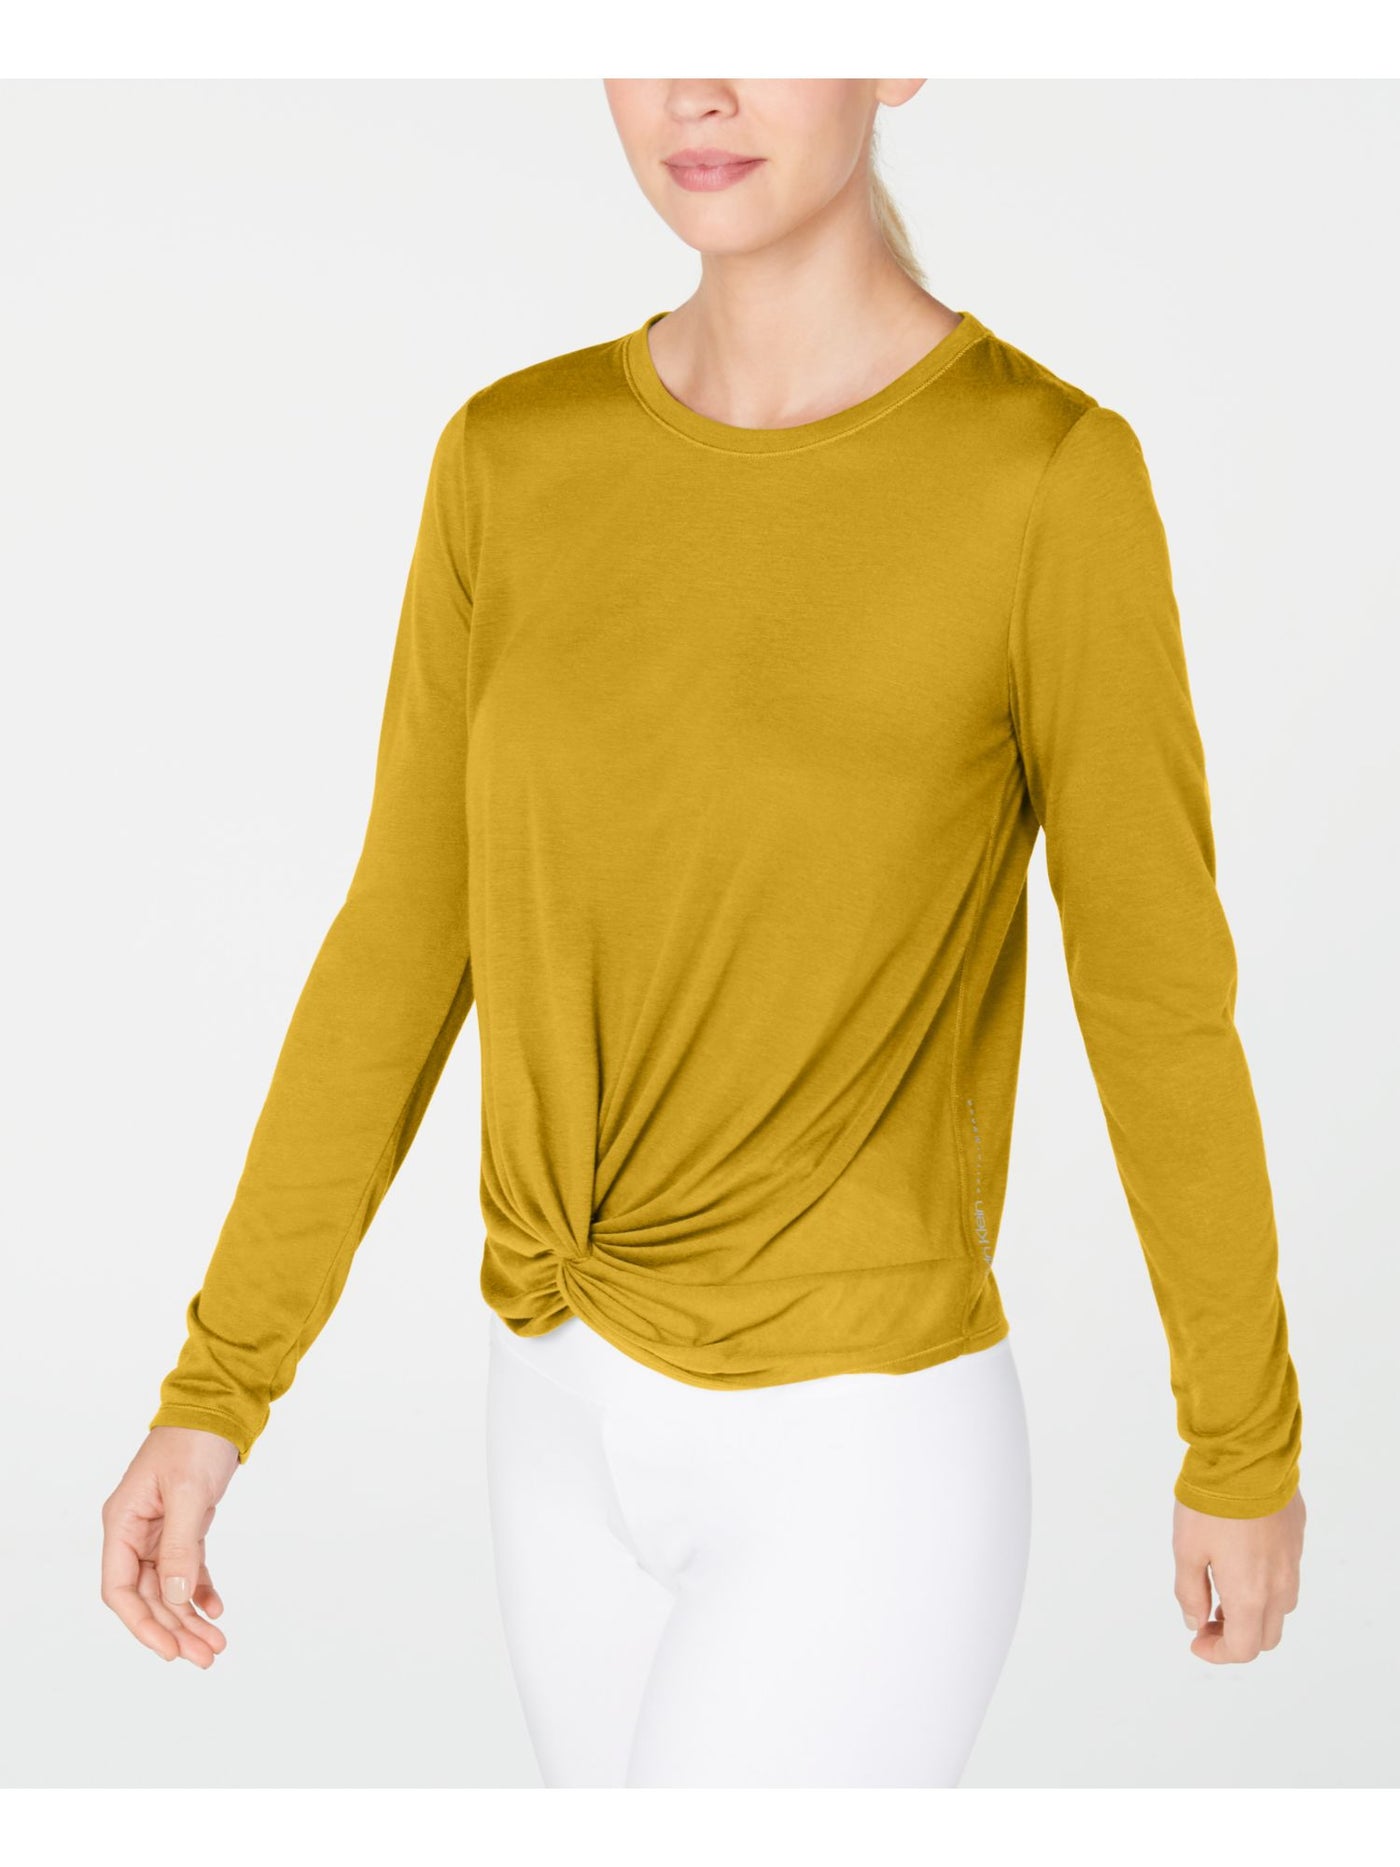 CALVIN KLEIN PERFORMANCE Womens Gold Moisture Wicking Twist Front Long Sleeve Jewel Neck T-Shirt XS